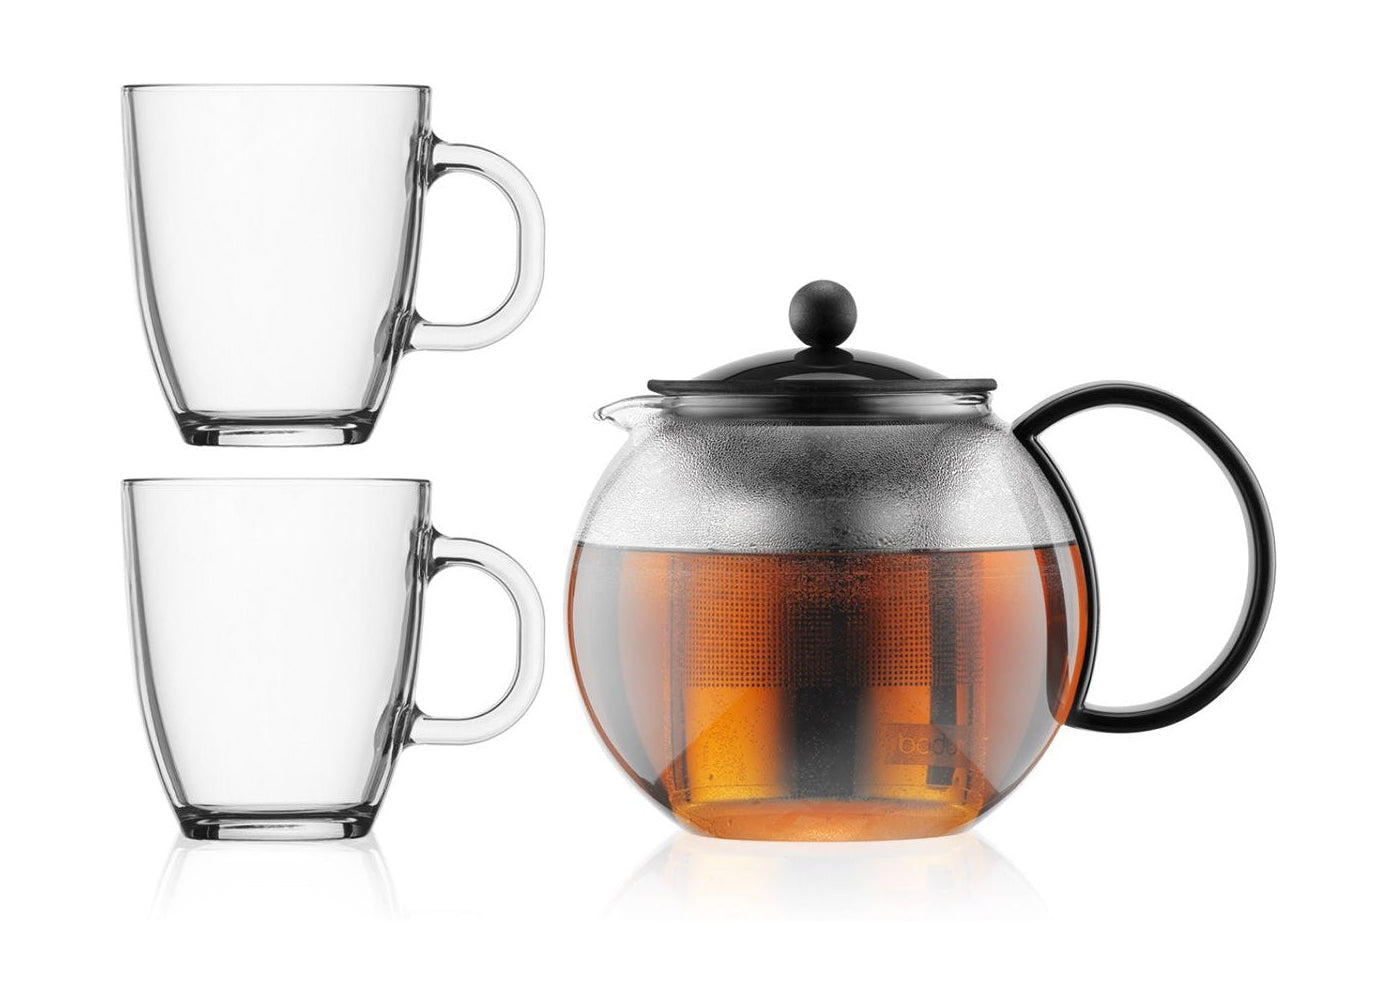 Bodum Assam Set Tea Maker With Filter And Cup Glass, 2 Pcs.